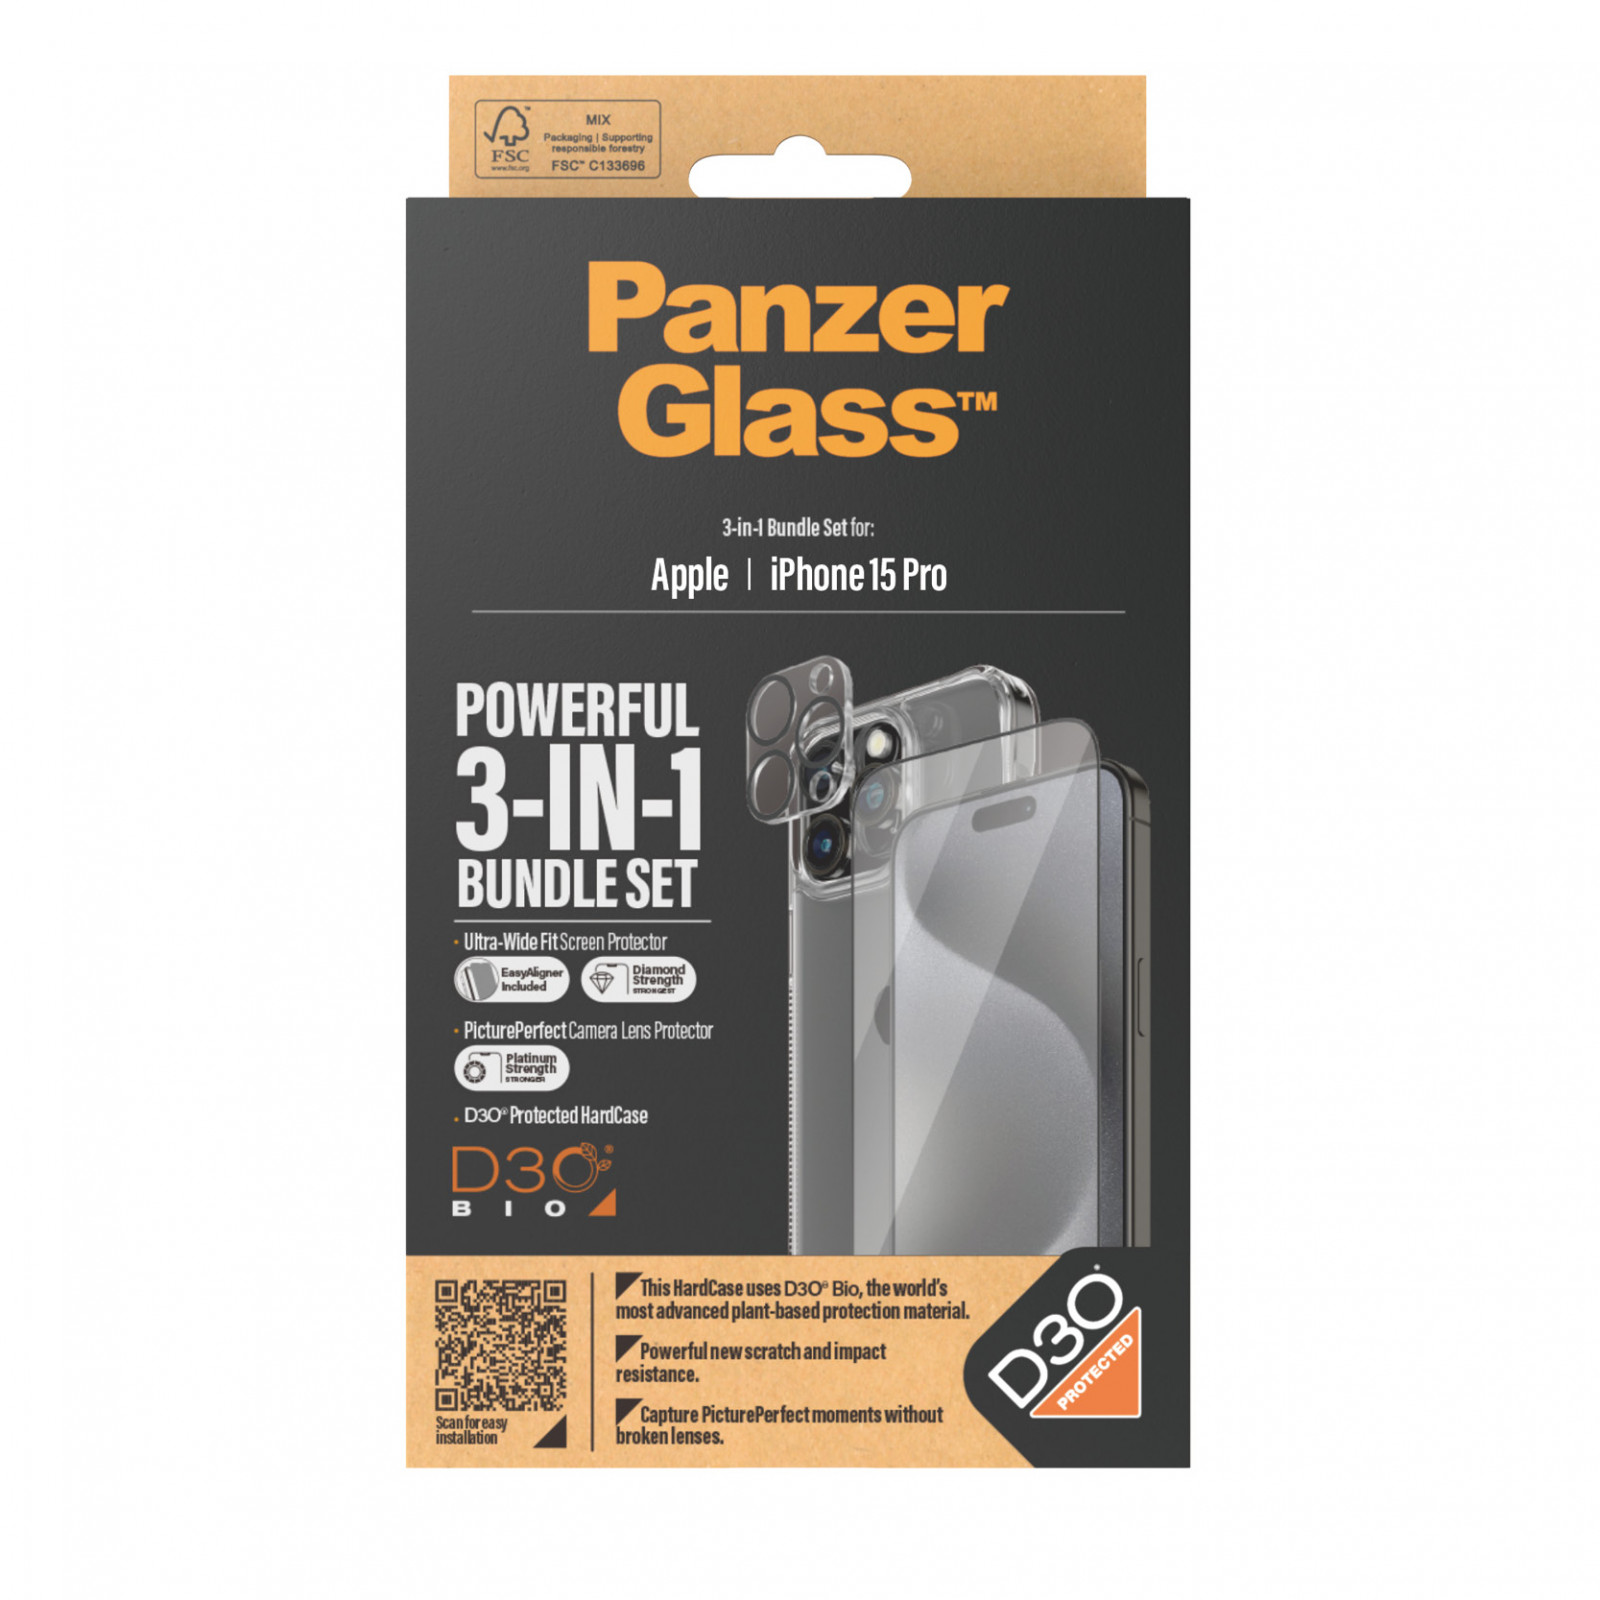 Стъклен протектор PanzerGlass за Apple iPhone 15 Pro, 3 в 1, UWF, Bundle, UWF screen protector, HardCase, протектор за камера